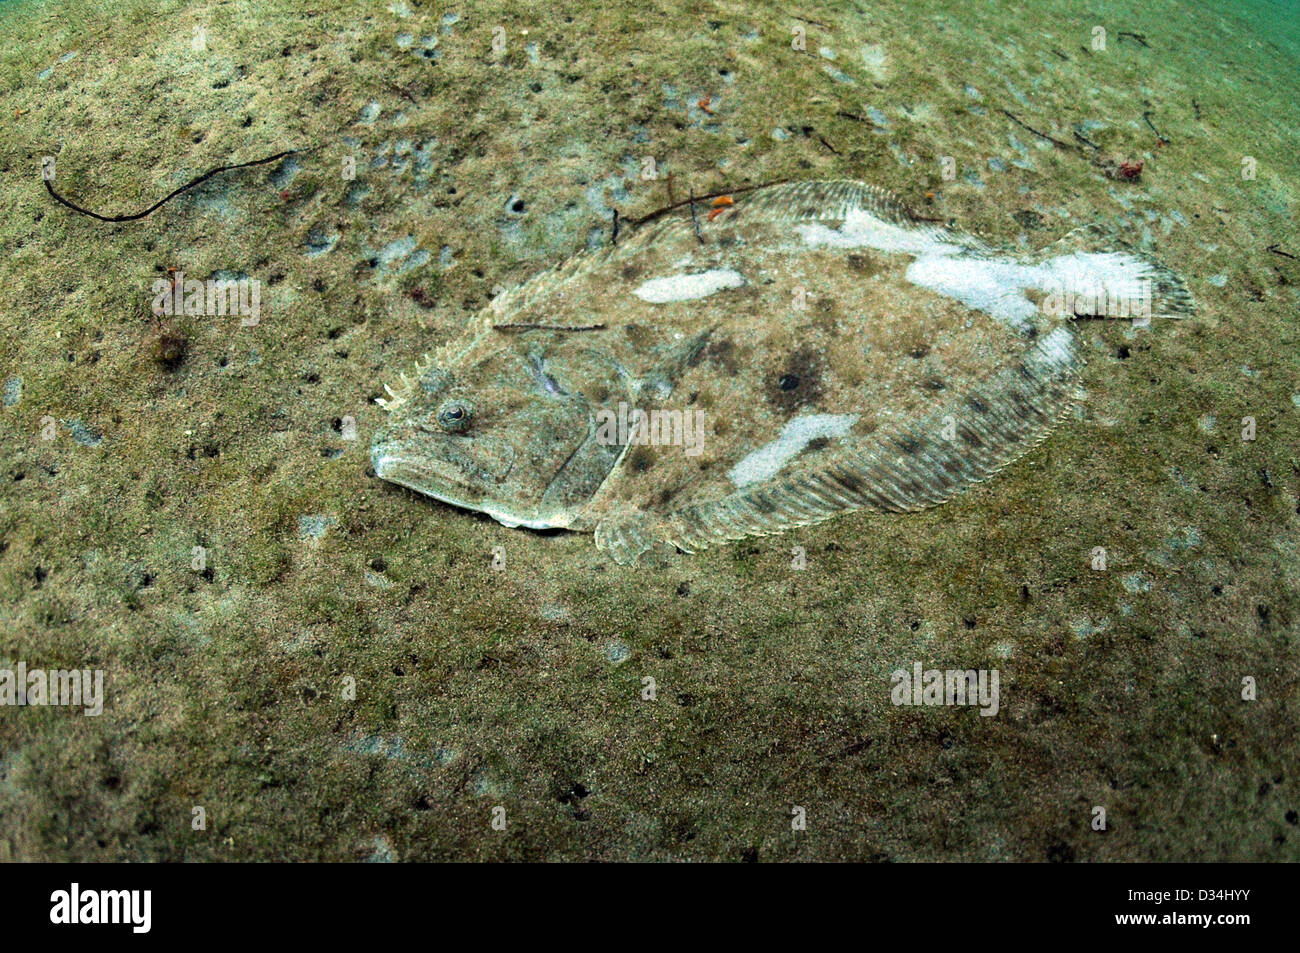 Atlantic ocean camouflage sand flatfish hi-res stock photography